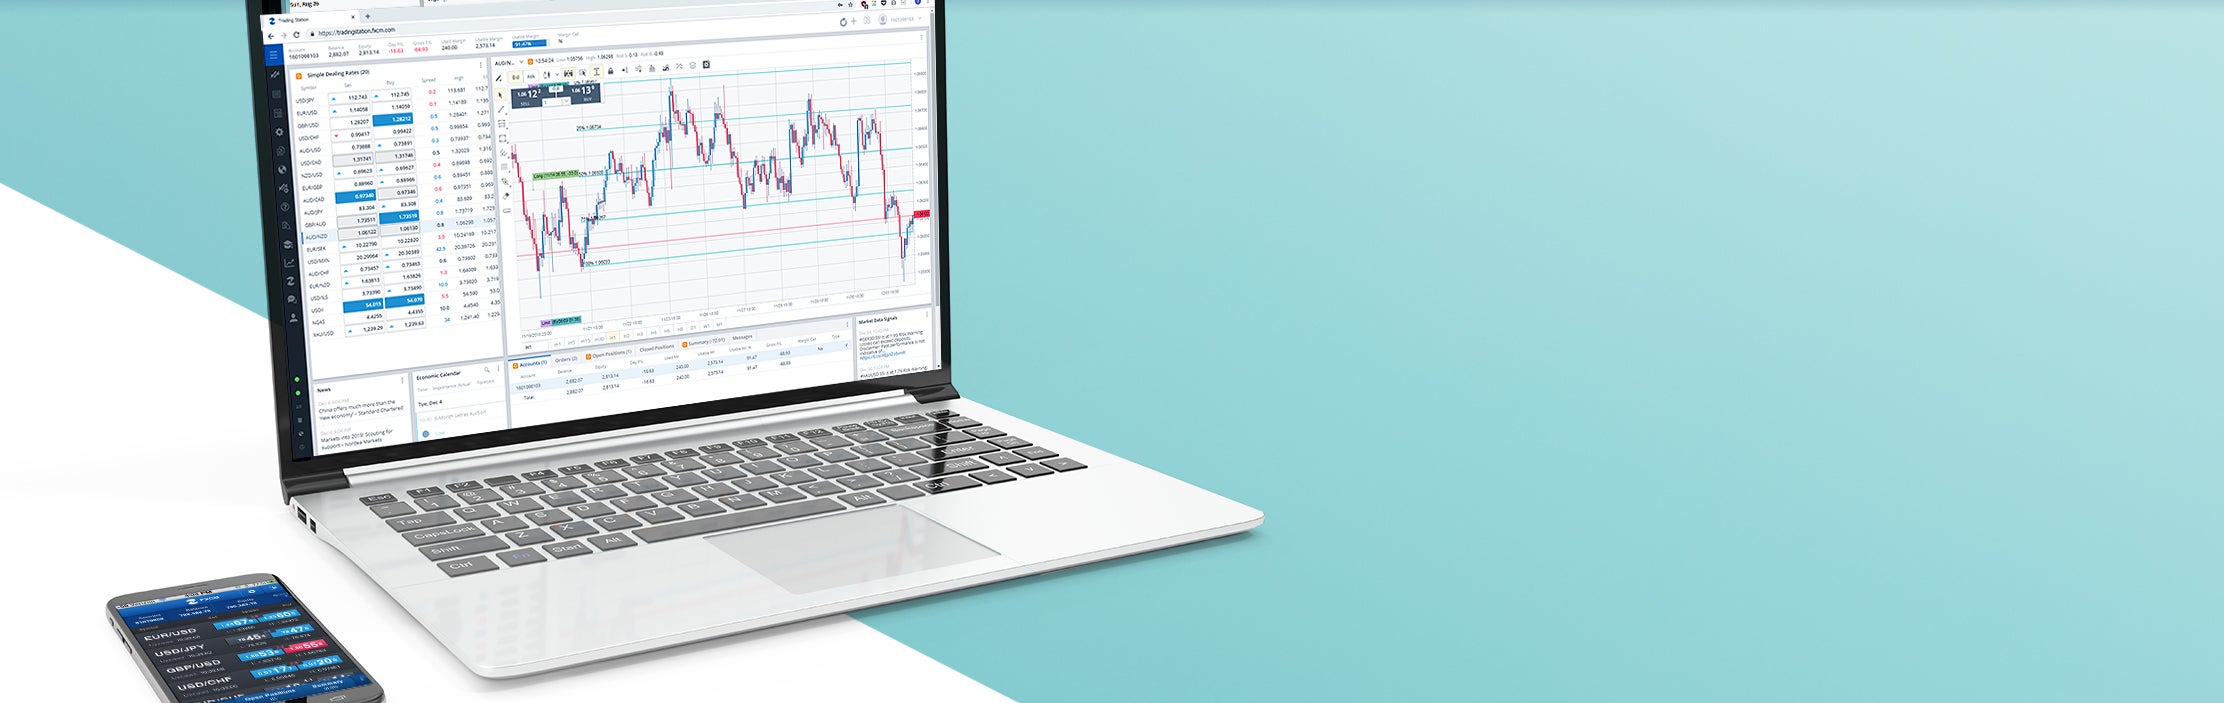 forex trading platform for mac